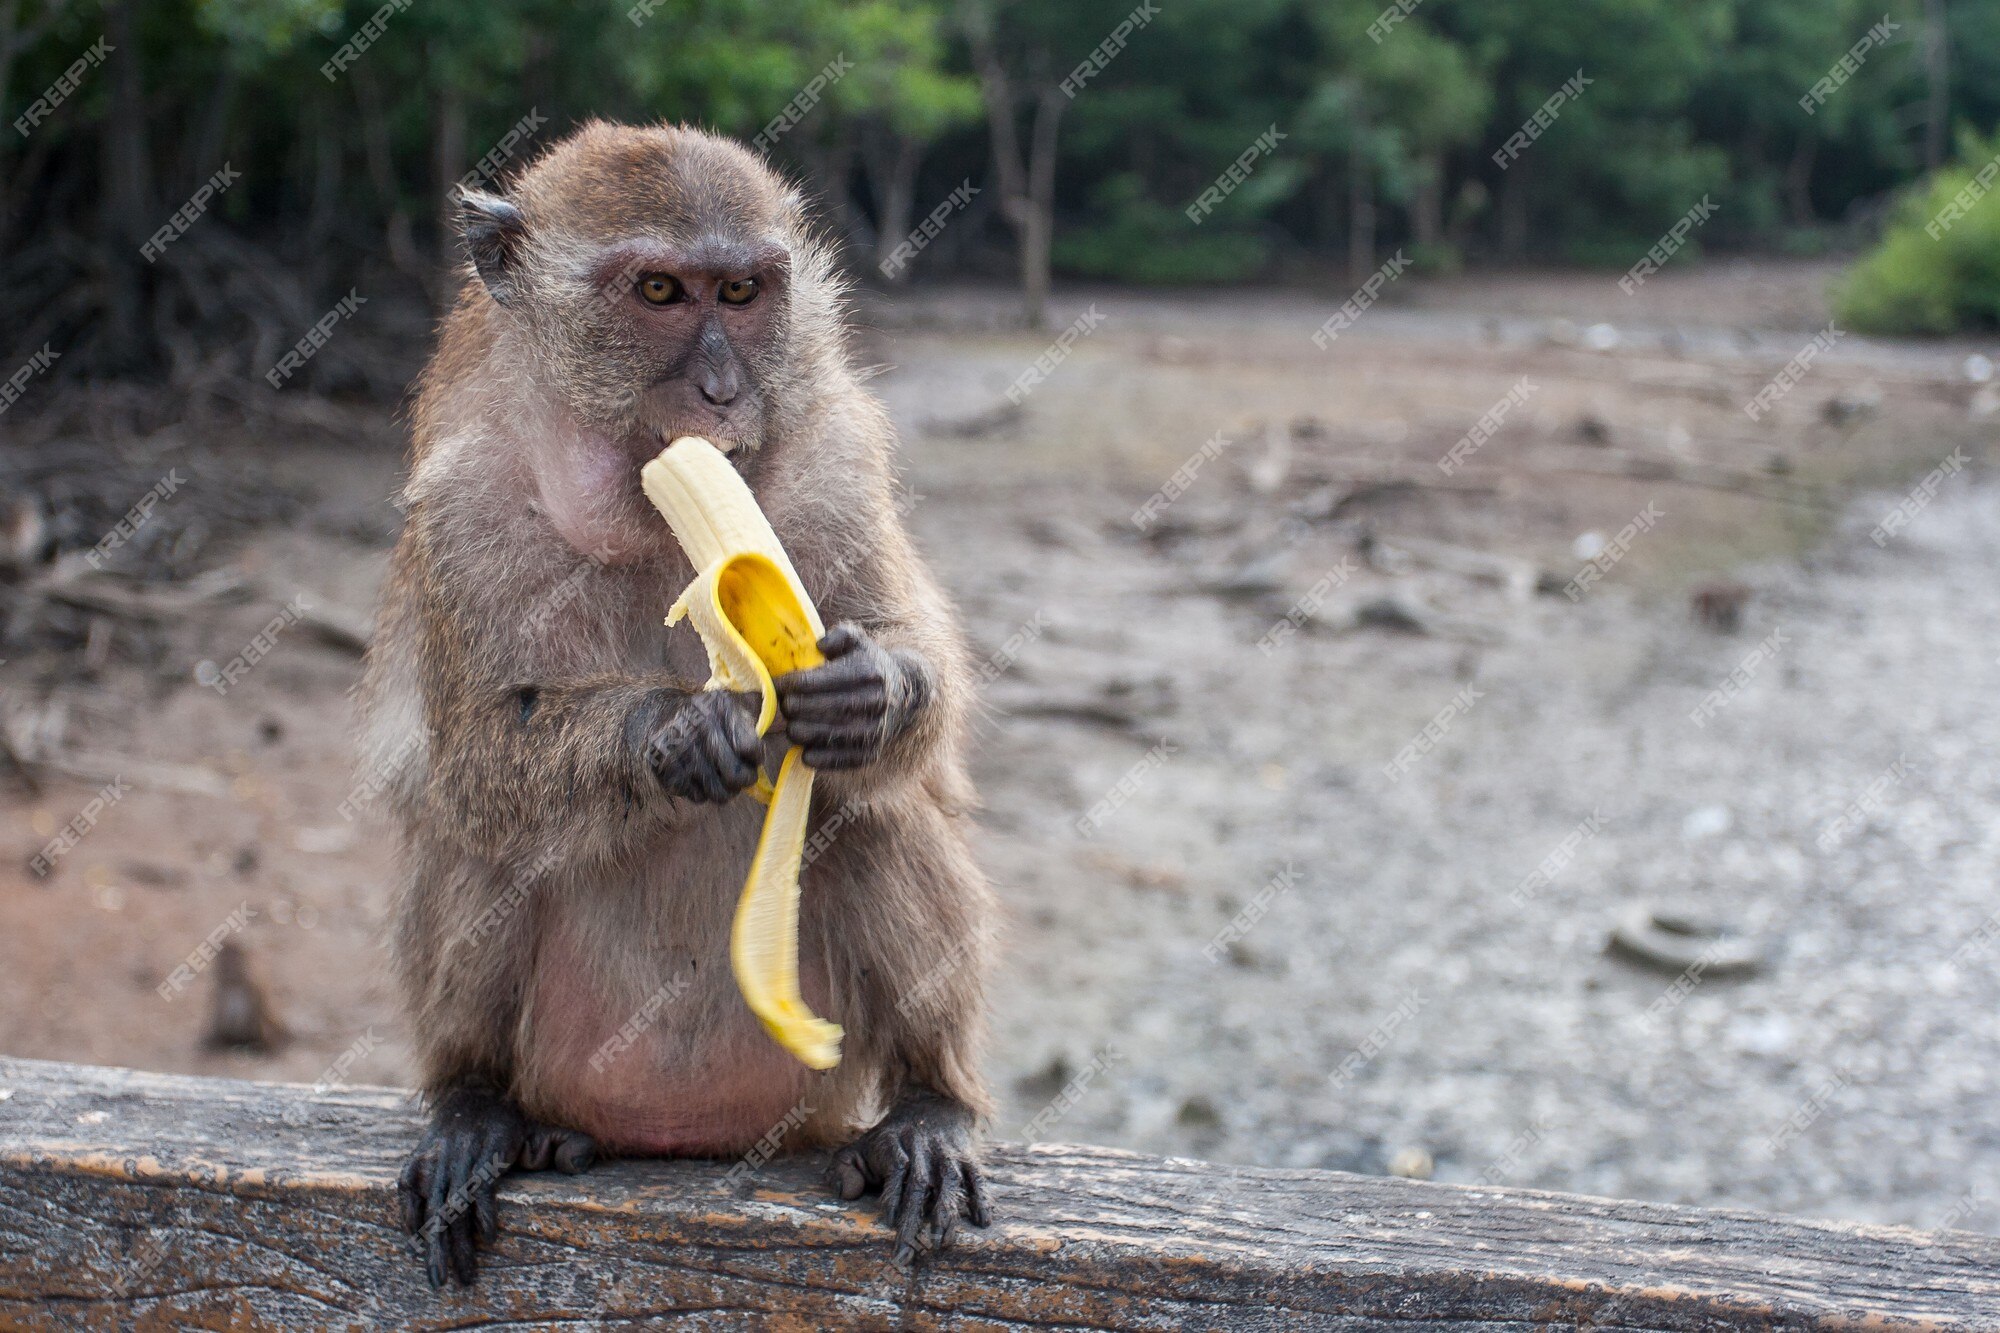 mono-macaco-divertido-come-platano-sentado-barandilla_337410-178.jpg